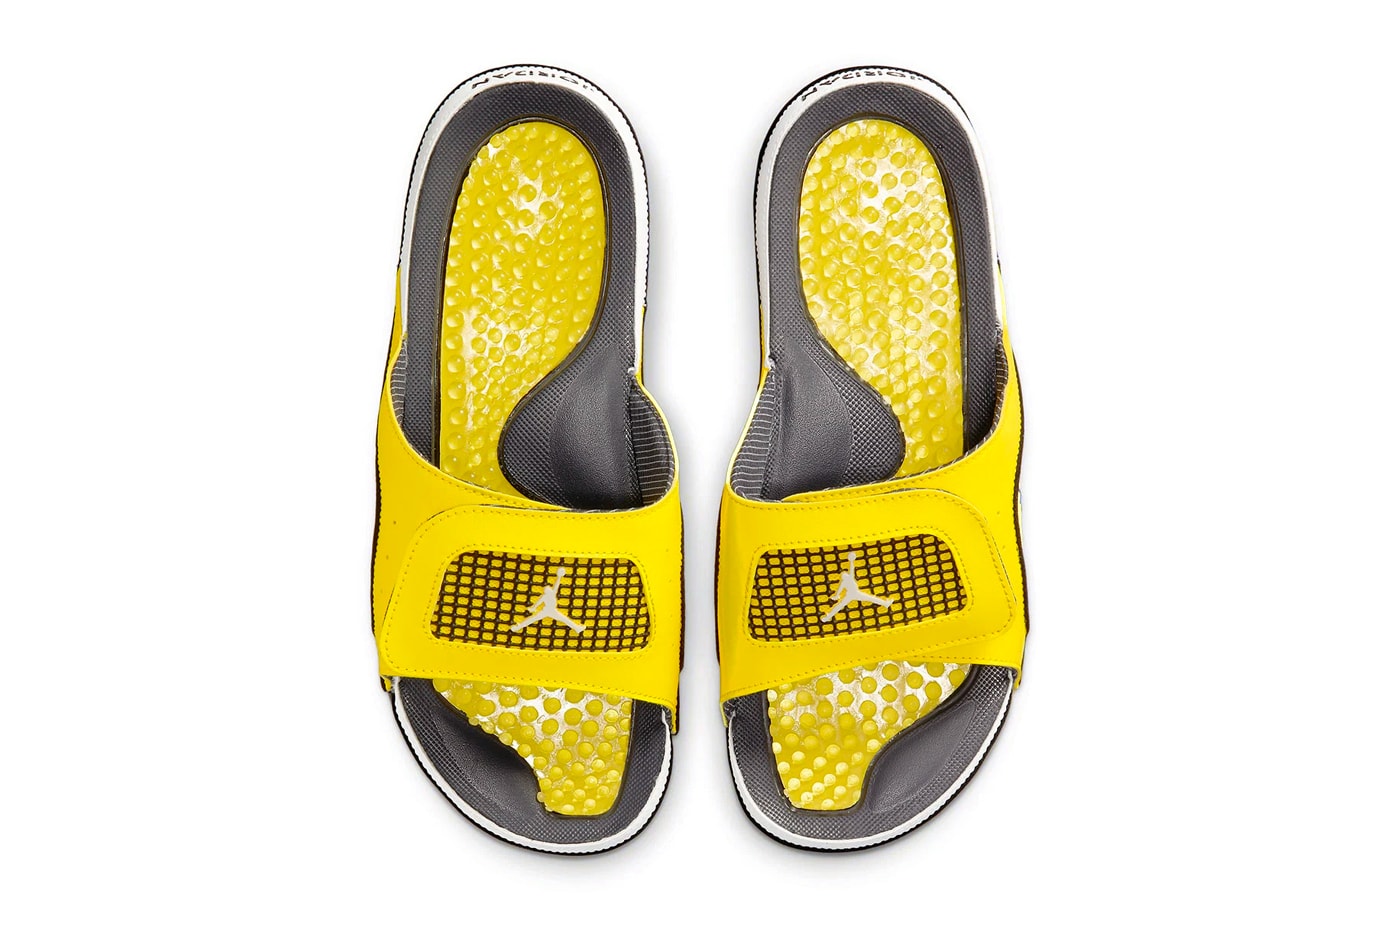 Jordan brand Hydro Slide IV Lightning Colorway release DN4238-701 sandals slides footwear AJ4 IV